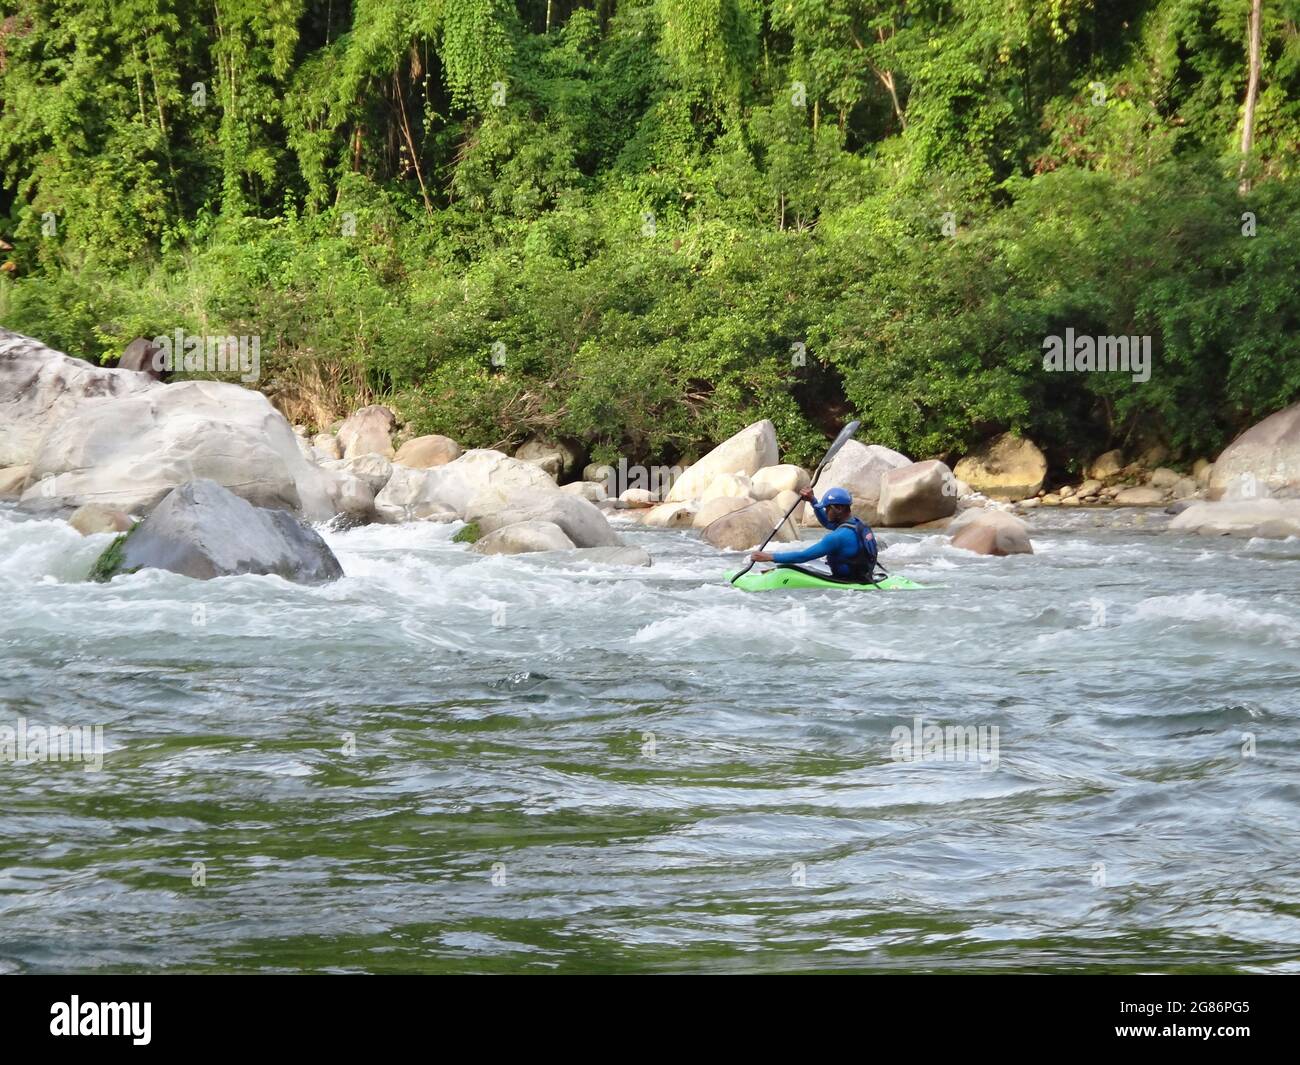 BARINAS, VENEZUELA - Apr 18, 2021: A person water rafting in Acequia river in Barinas, Venezuela Stock Photo